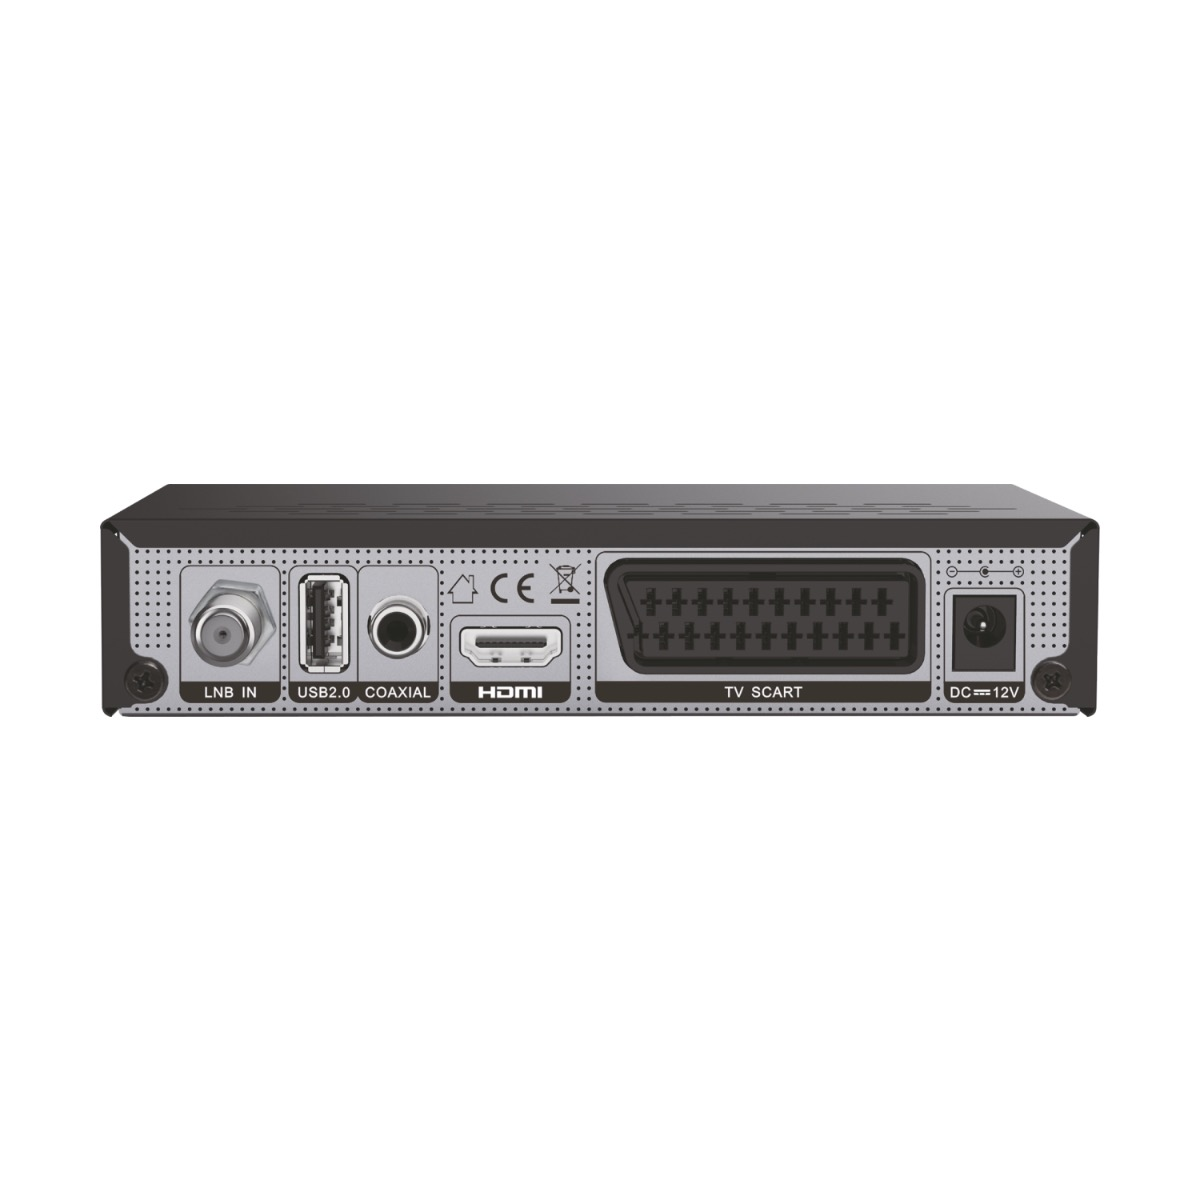 ANKARO ANK DSR 2100 mit schwarz) HD, Receiver PVR, DVB-S, DVB-C2, 1080p Digitaler Full DVB-S2, DVB-T2 (HDTV, Sat DVB-S2, (H.265), Receiver, HDMI PVR-Funktion, Satelliten